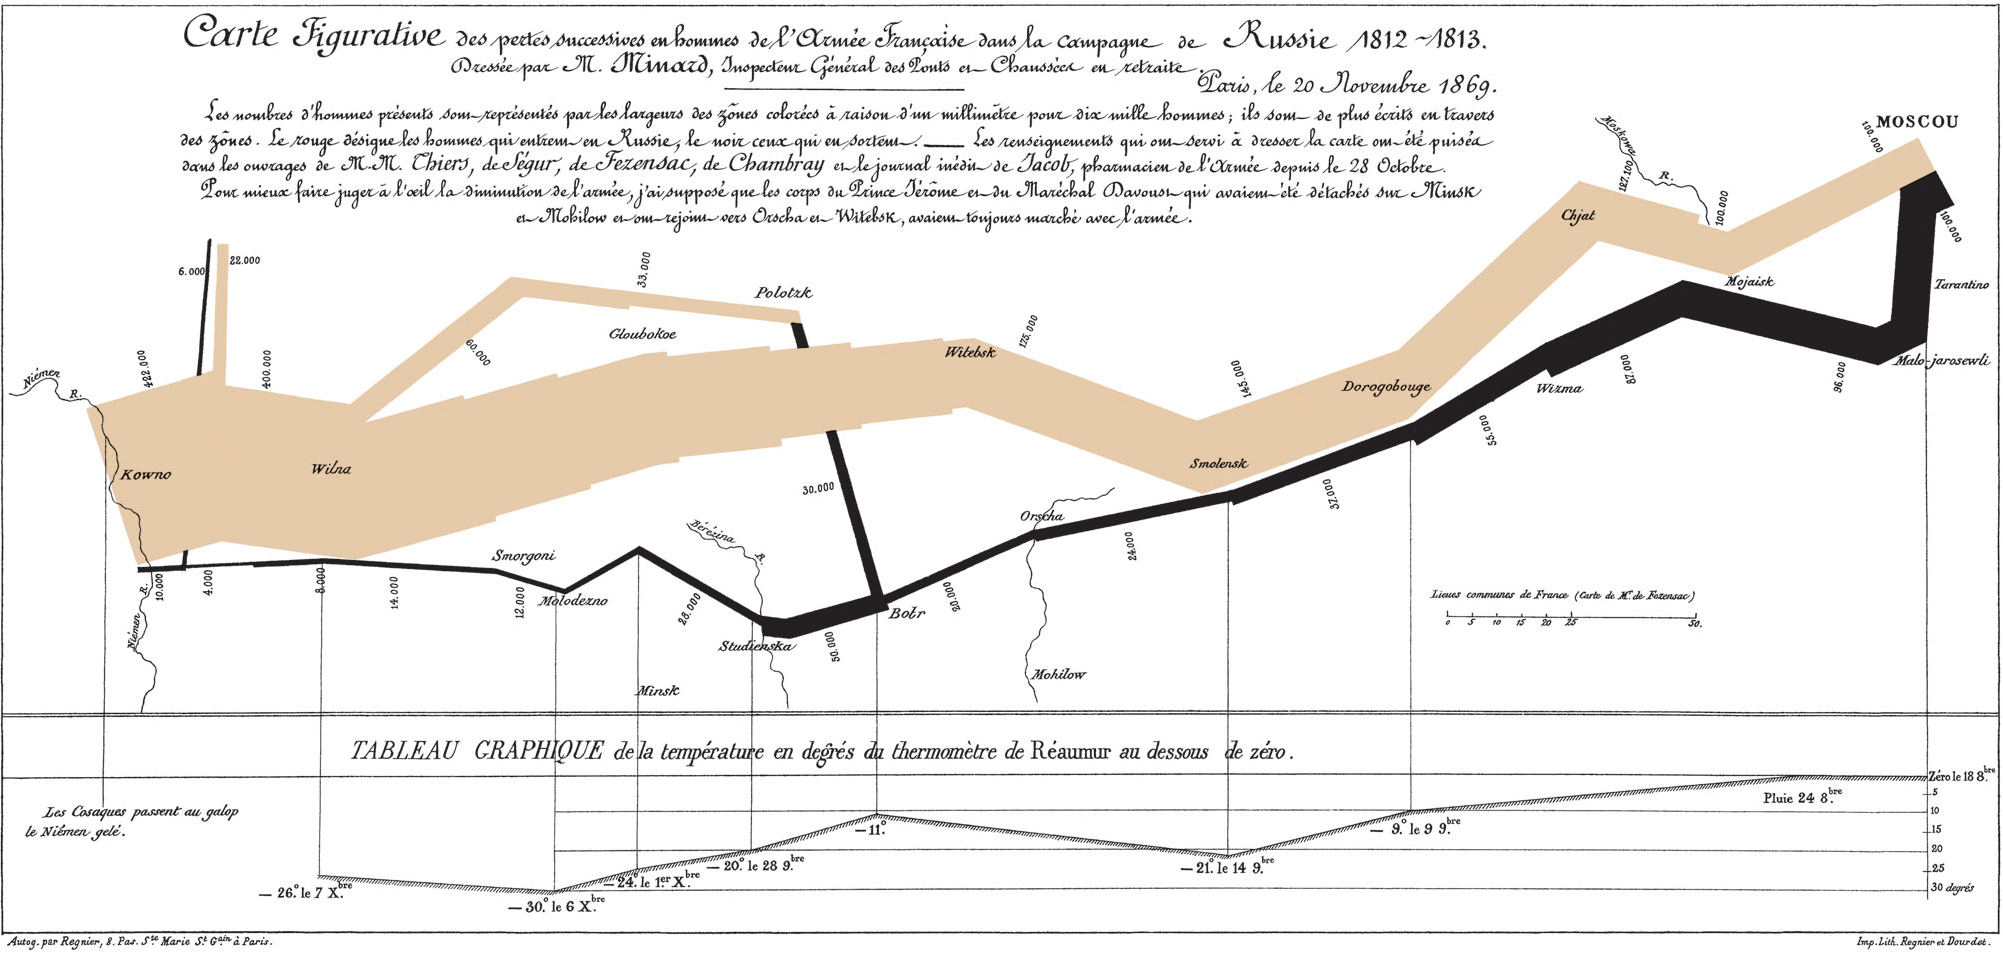 1813 Napoleonic Wars – Minard